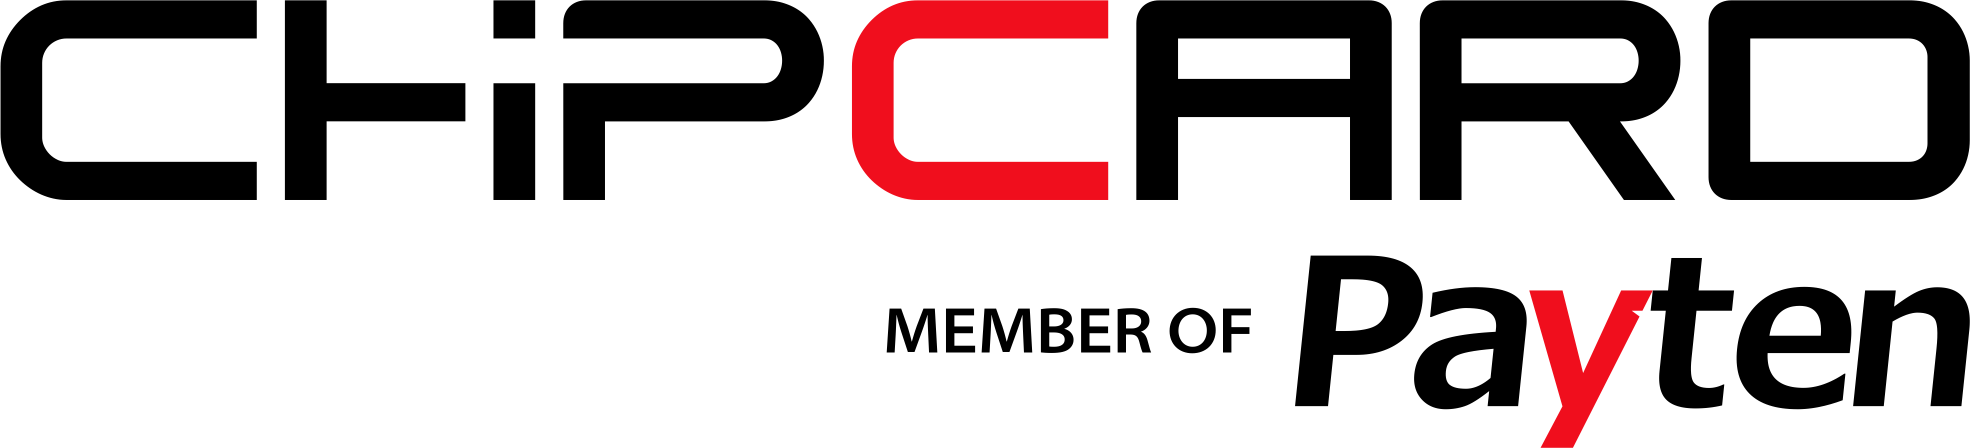 chip card logo